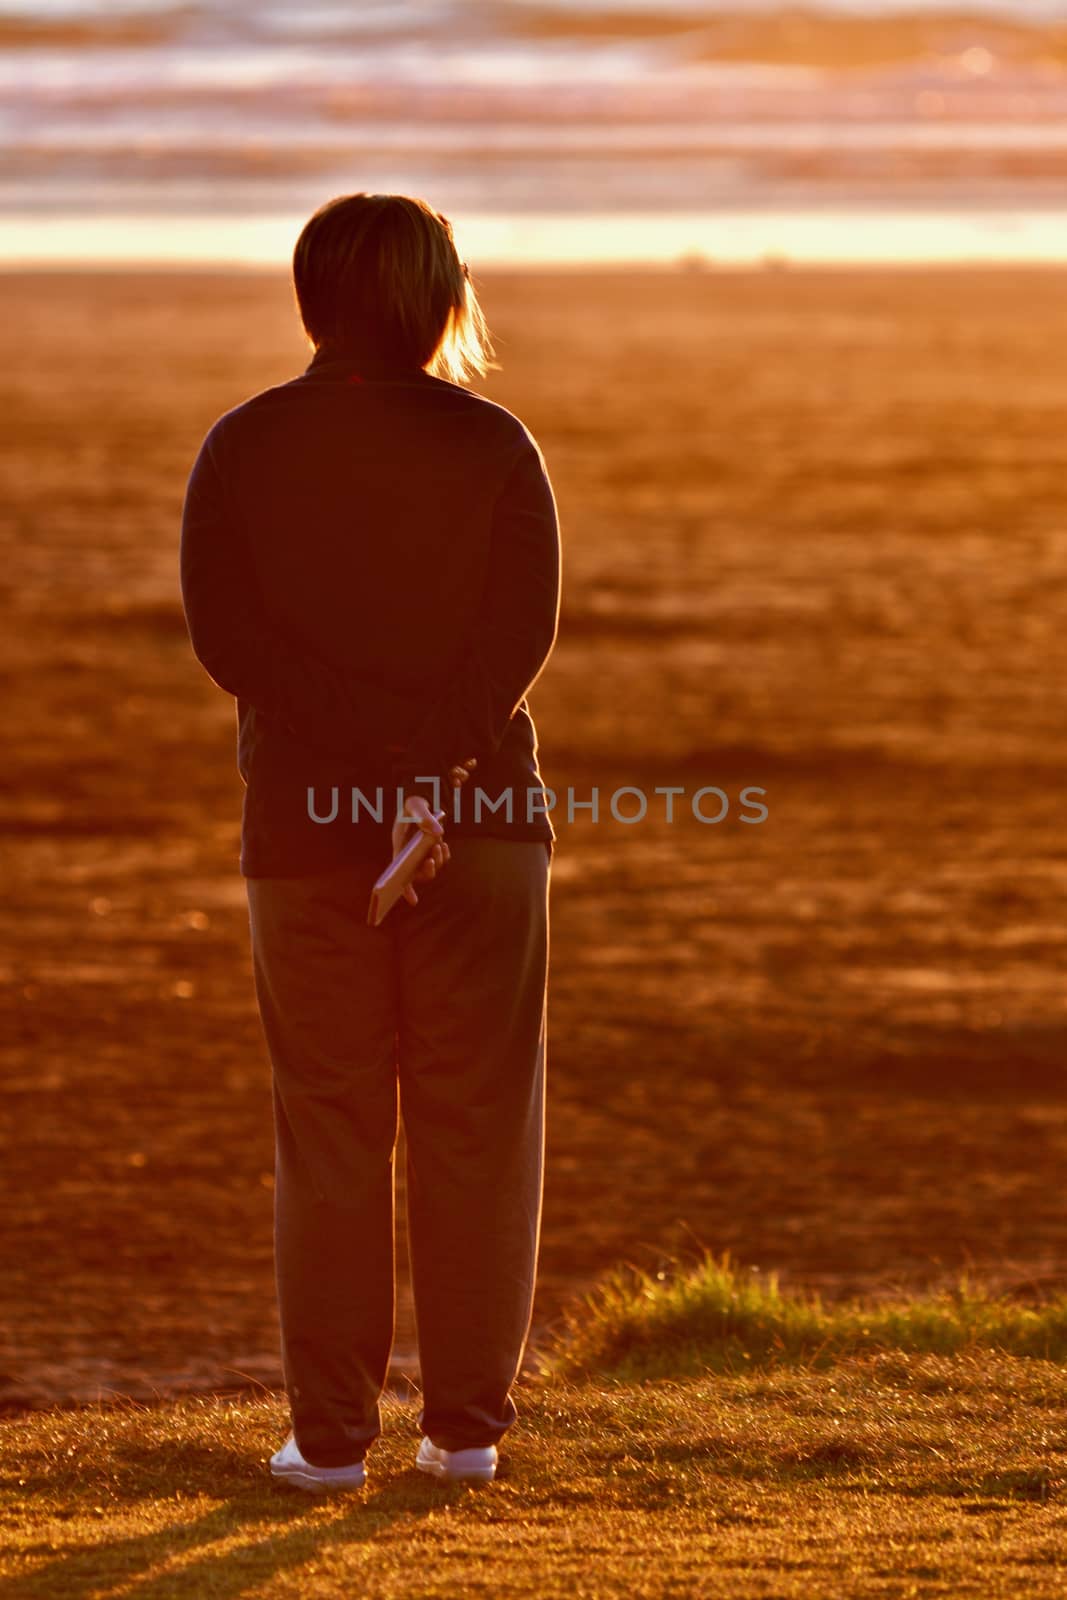 An unidentified person enjoying sunset on a beach.